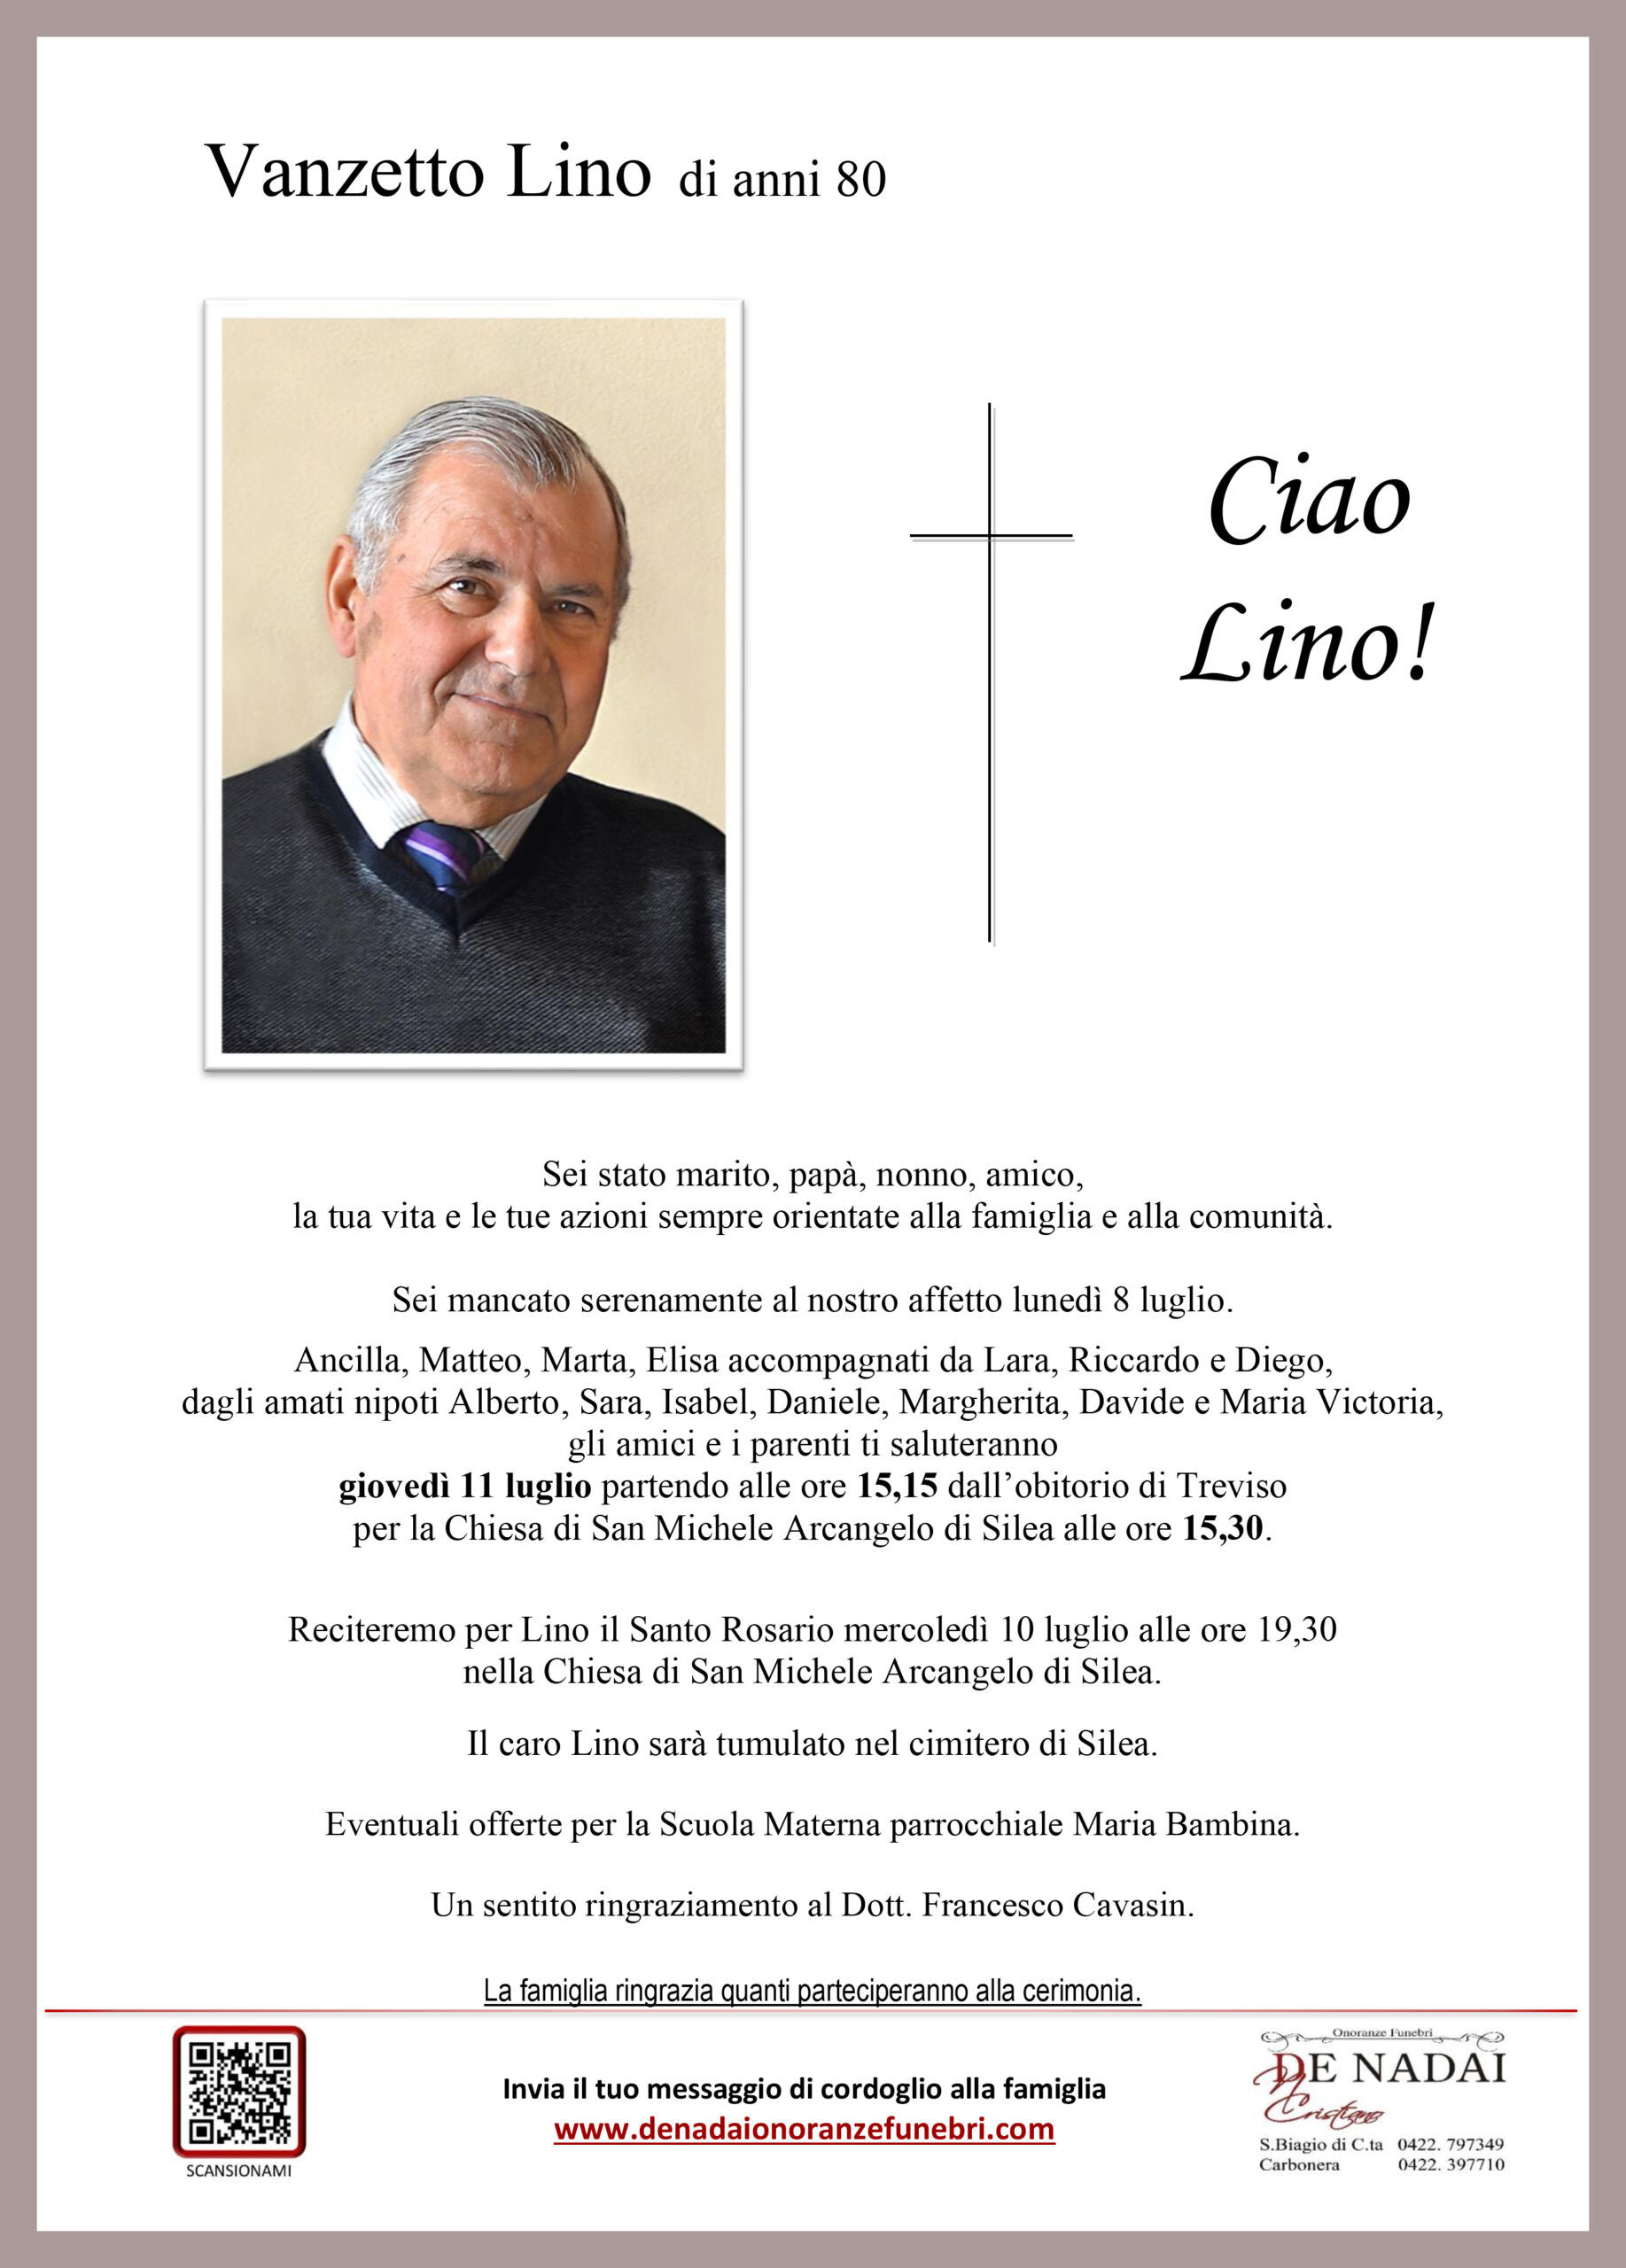 Vanzetto Lino